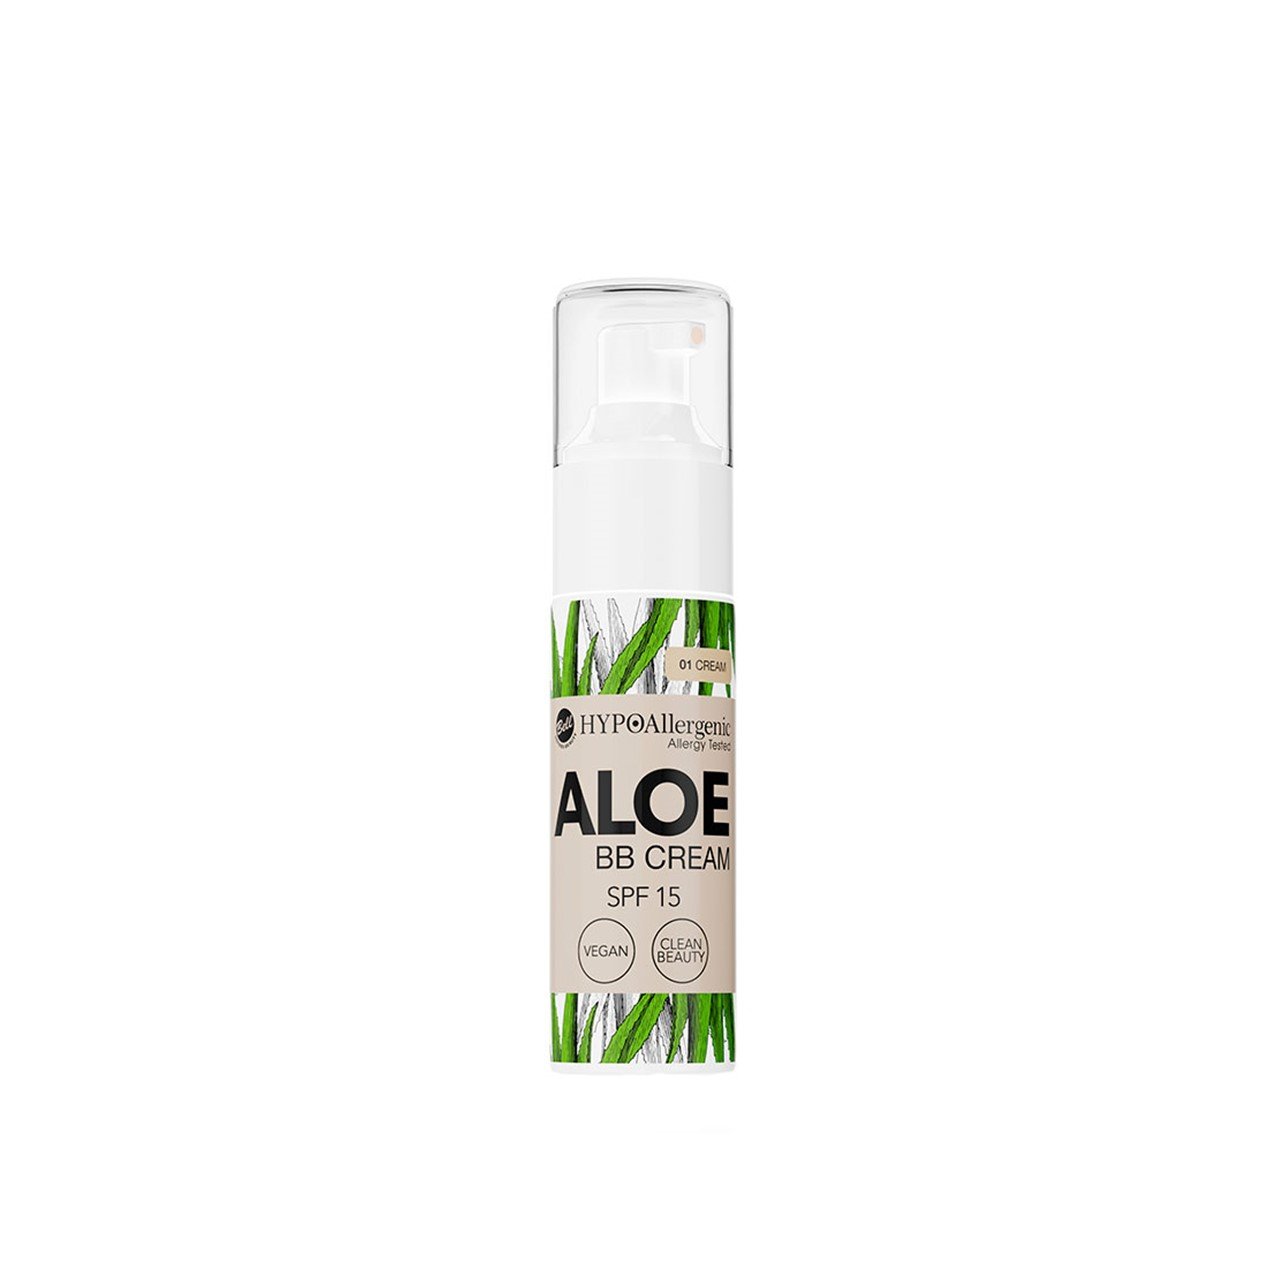 Bell HYPOAllergenic Aloe BB Cream SPF15 01 Cream 20g